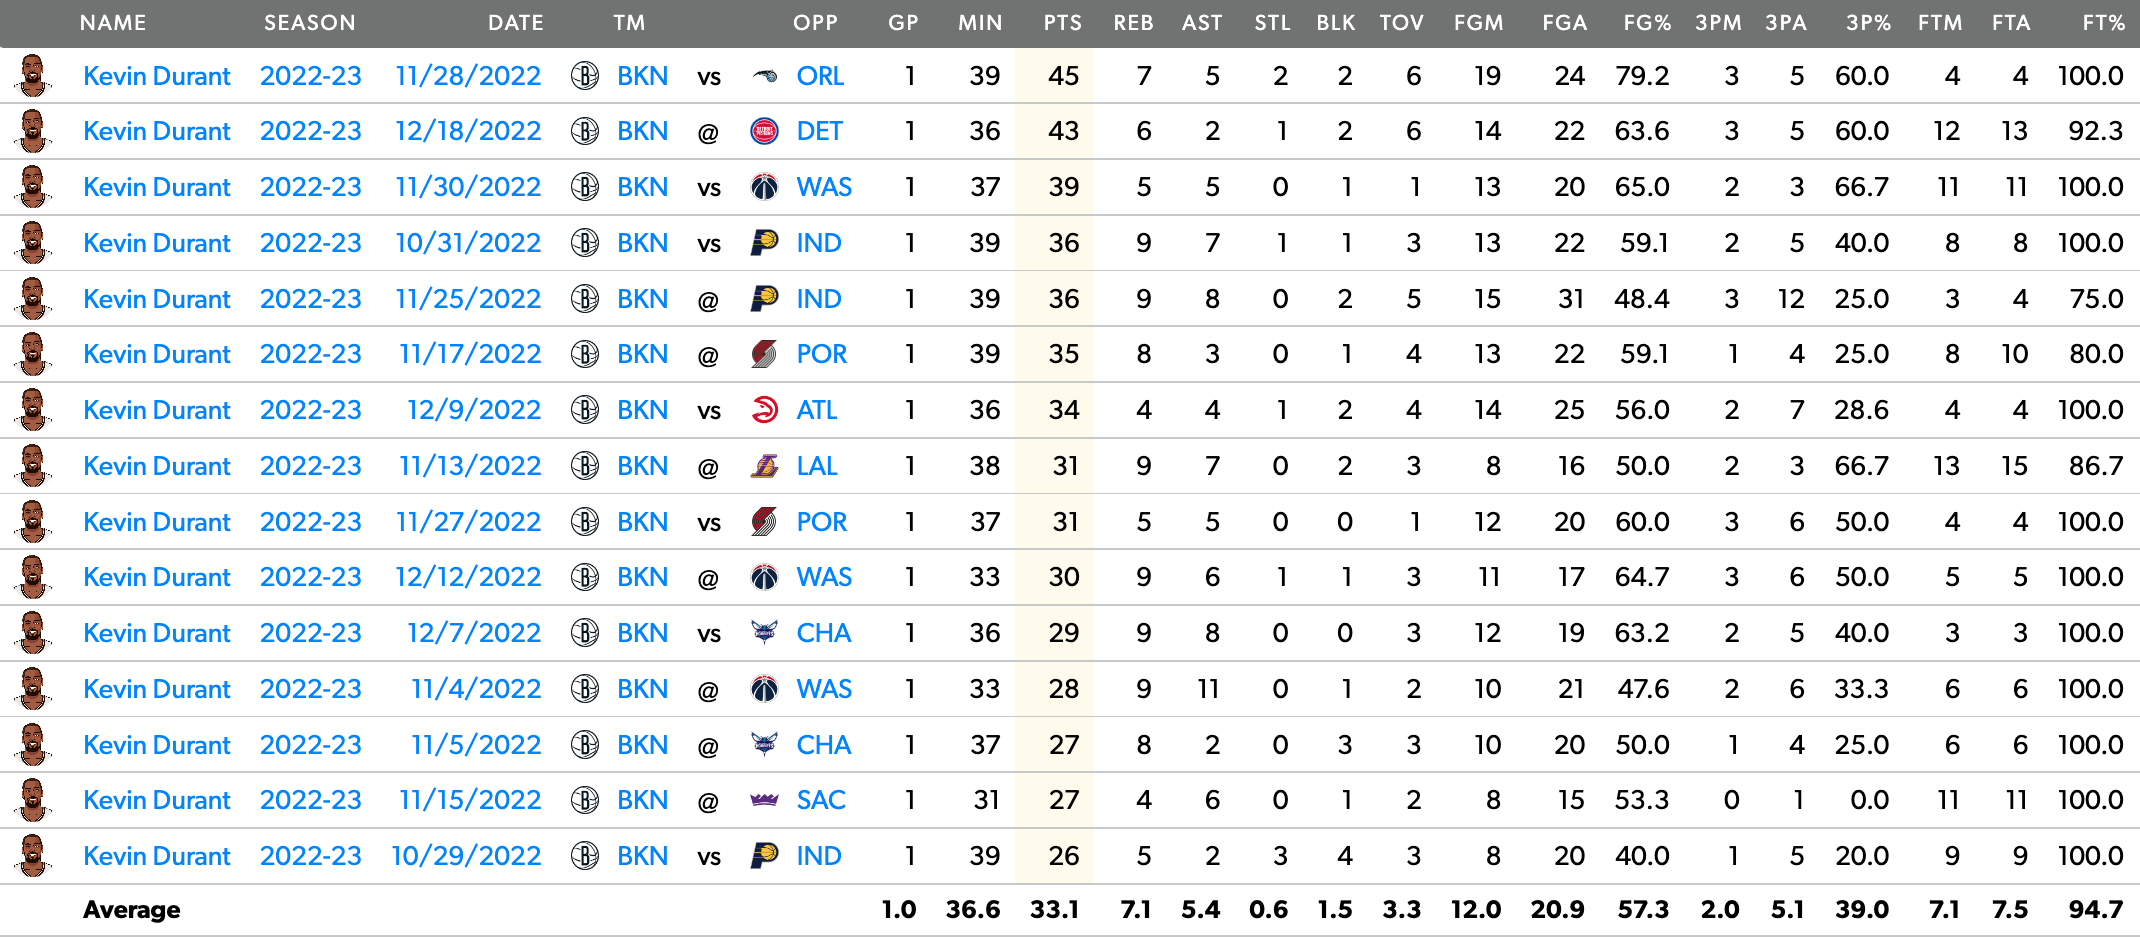 Permainan Durant vs pertahanan di bawah rata-rata musim ini.